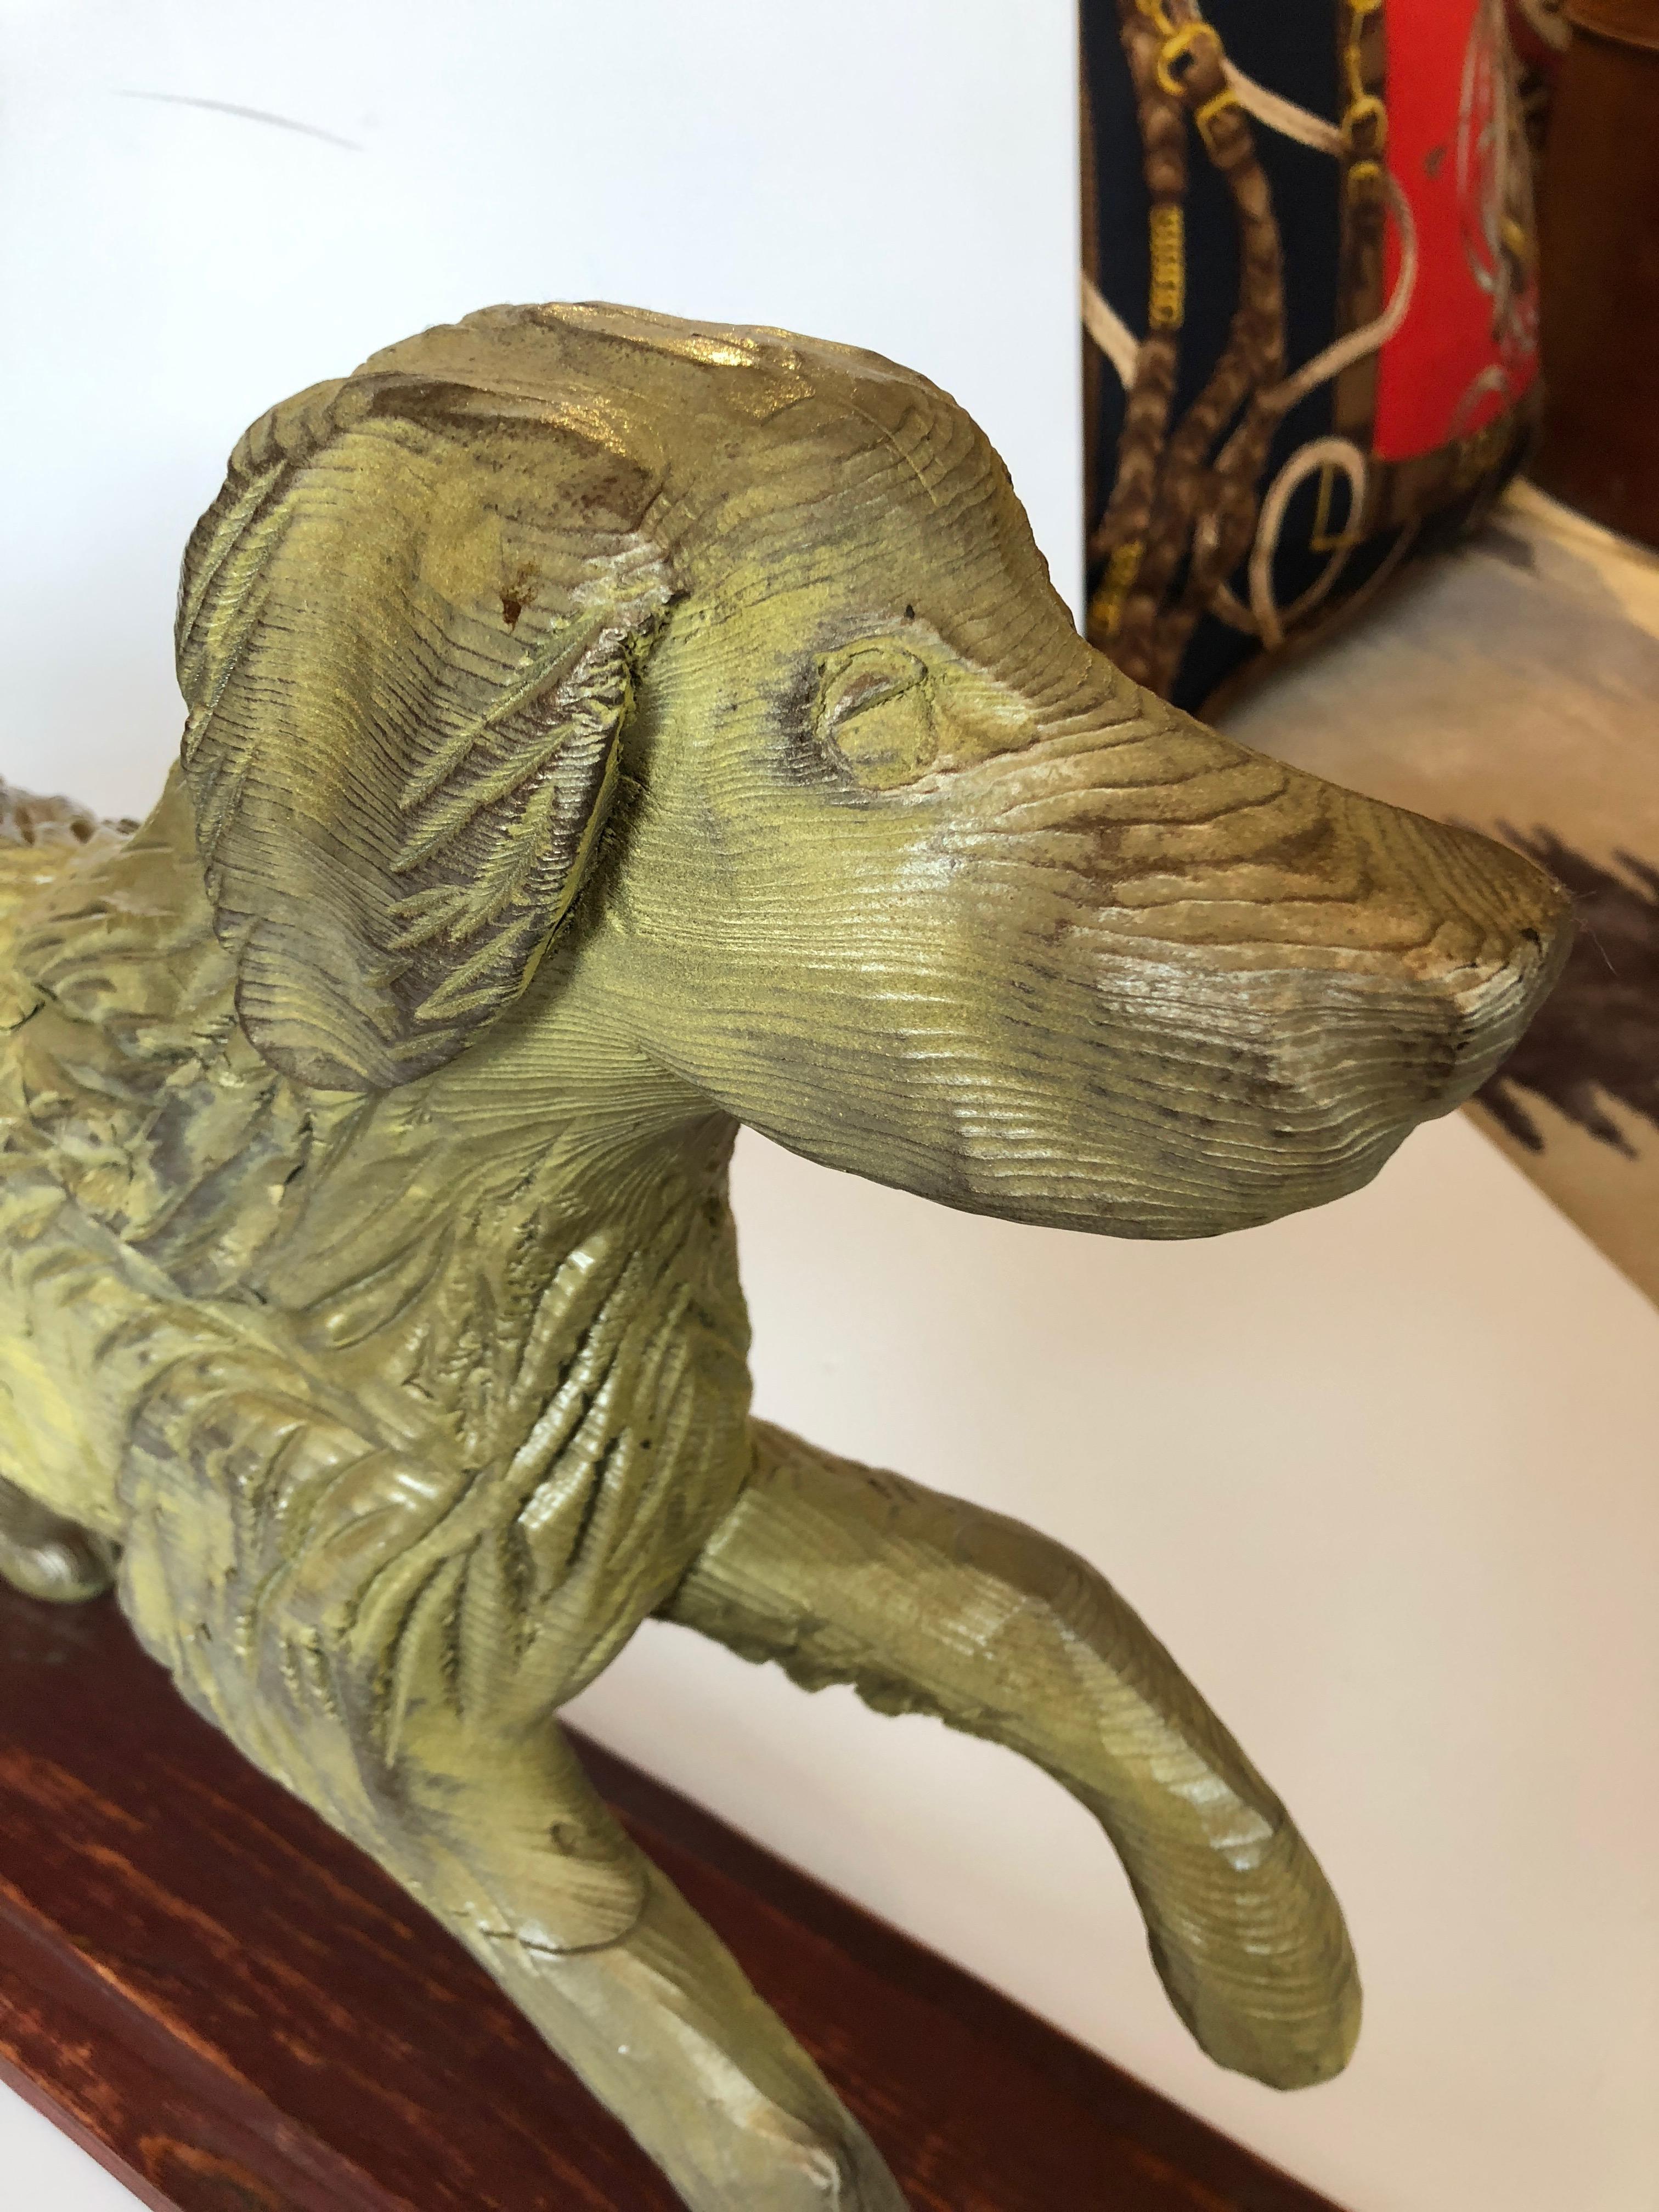 Rustic Vintage Sculpture of a Prancing Retriever Dog 3